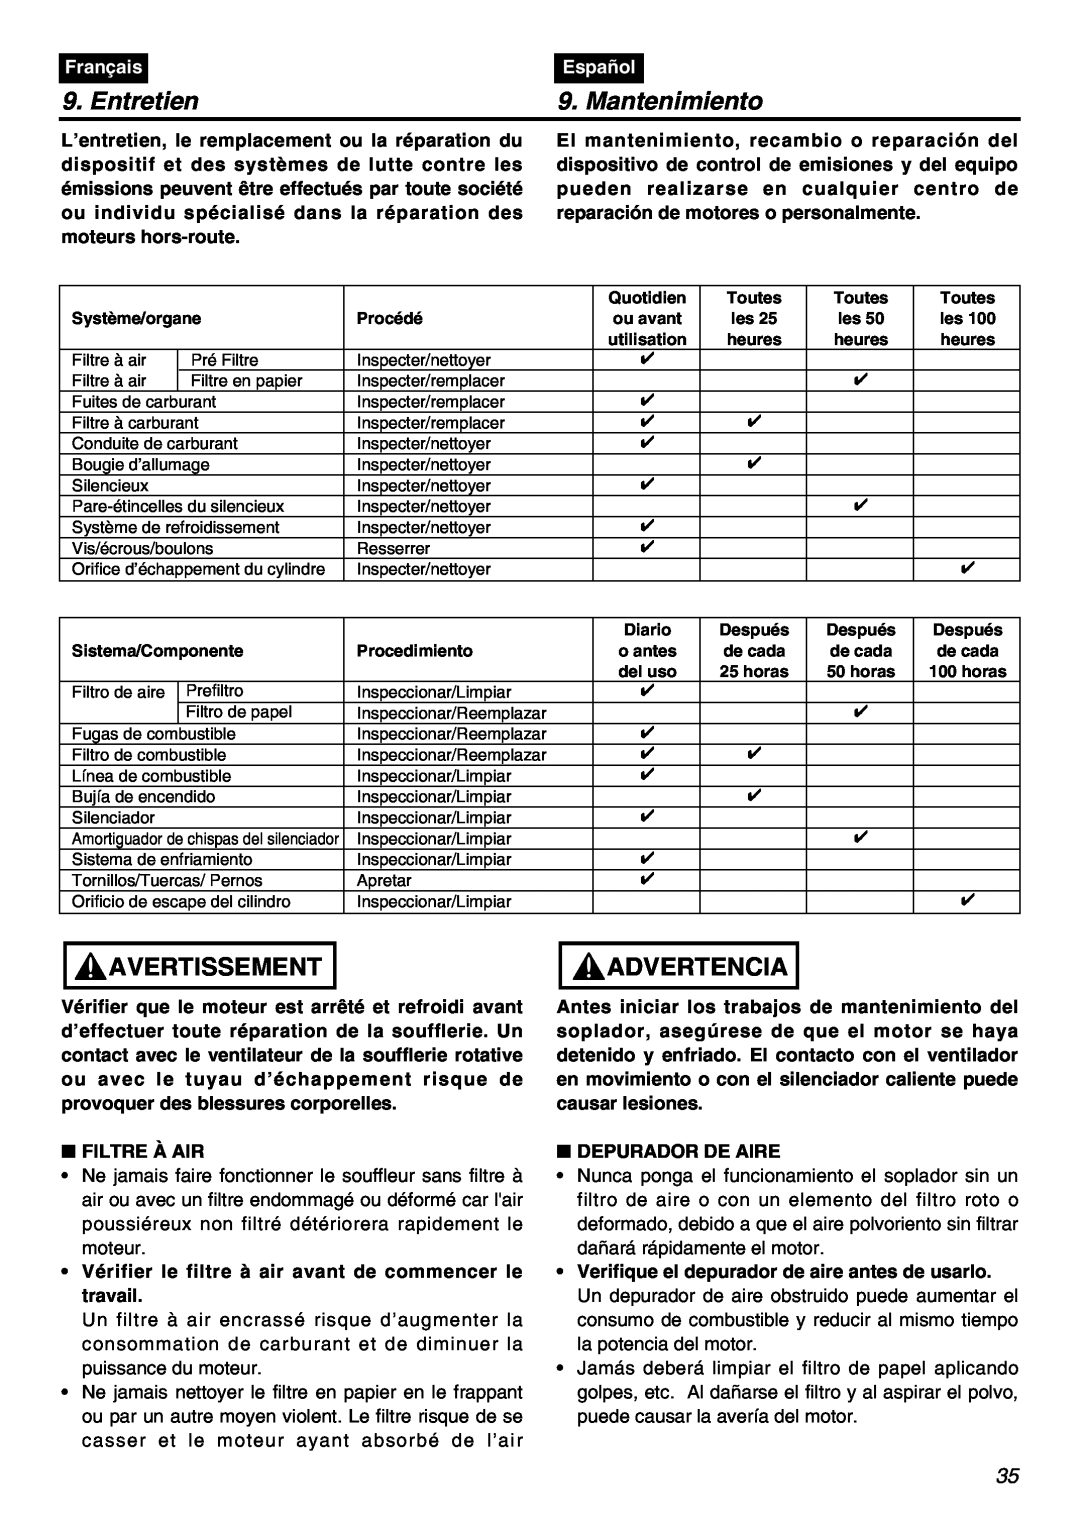 RedMax EBZ7001RH-CA, EBZ7001-CA manual Entretien, Mantenimiento, Avertissement, Advertencia, Français, Español 